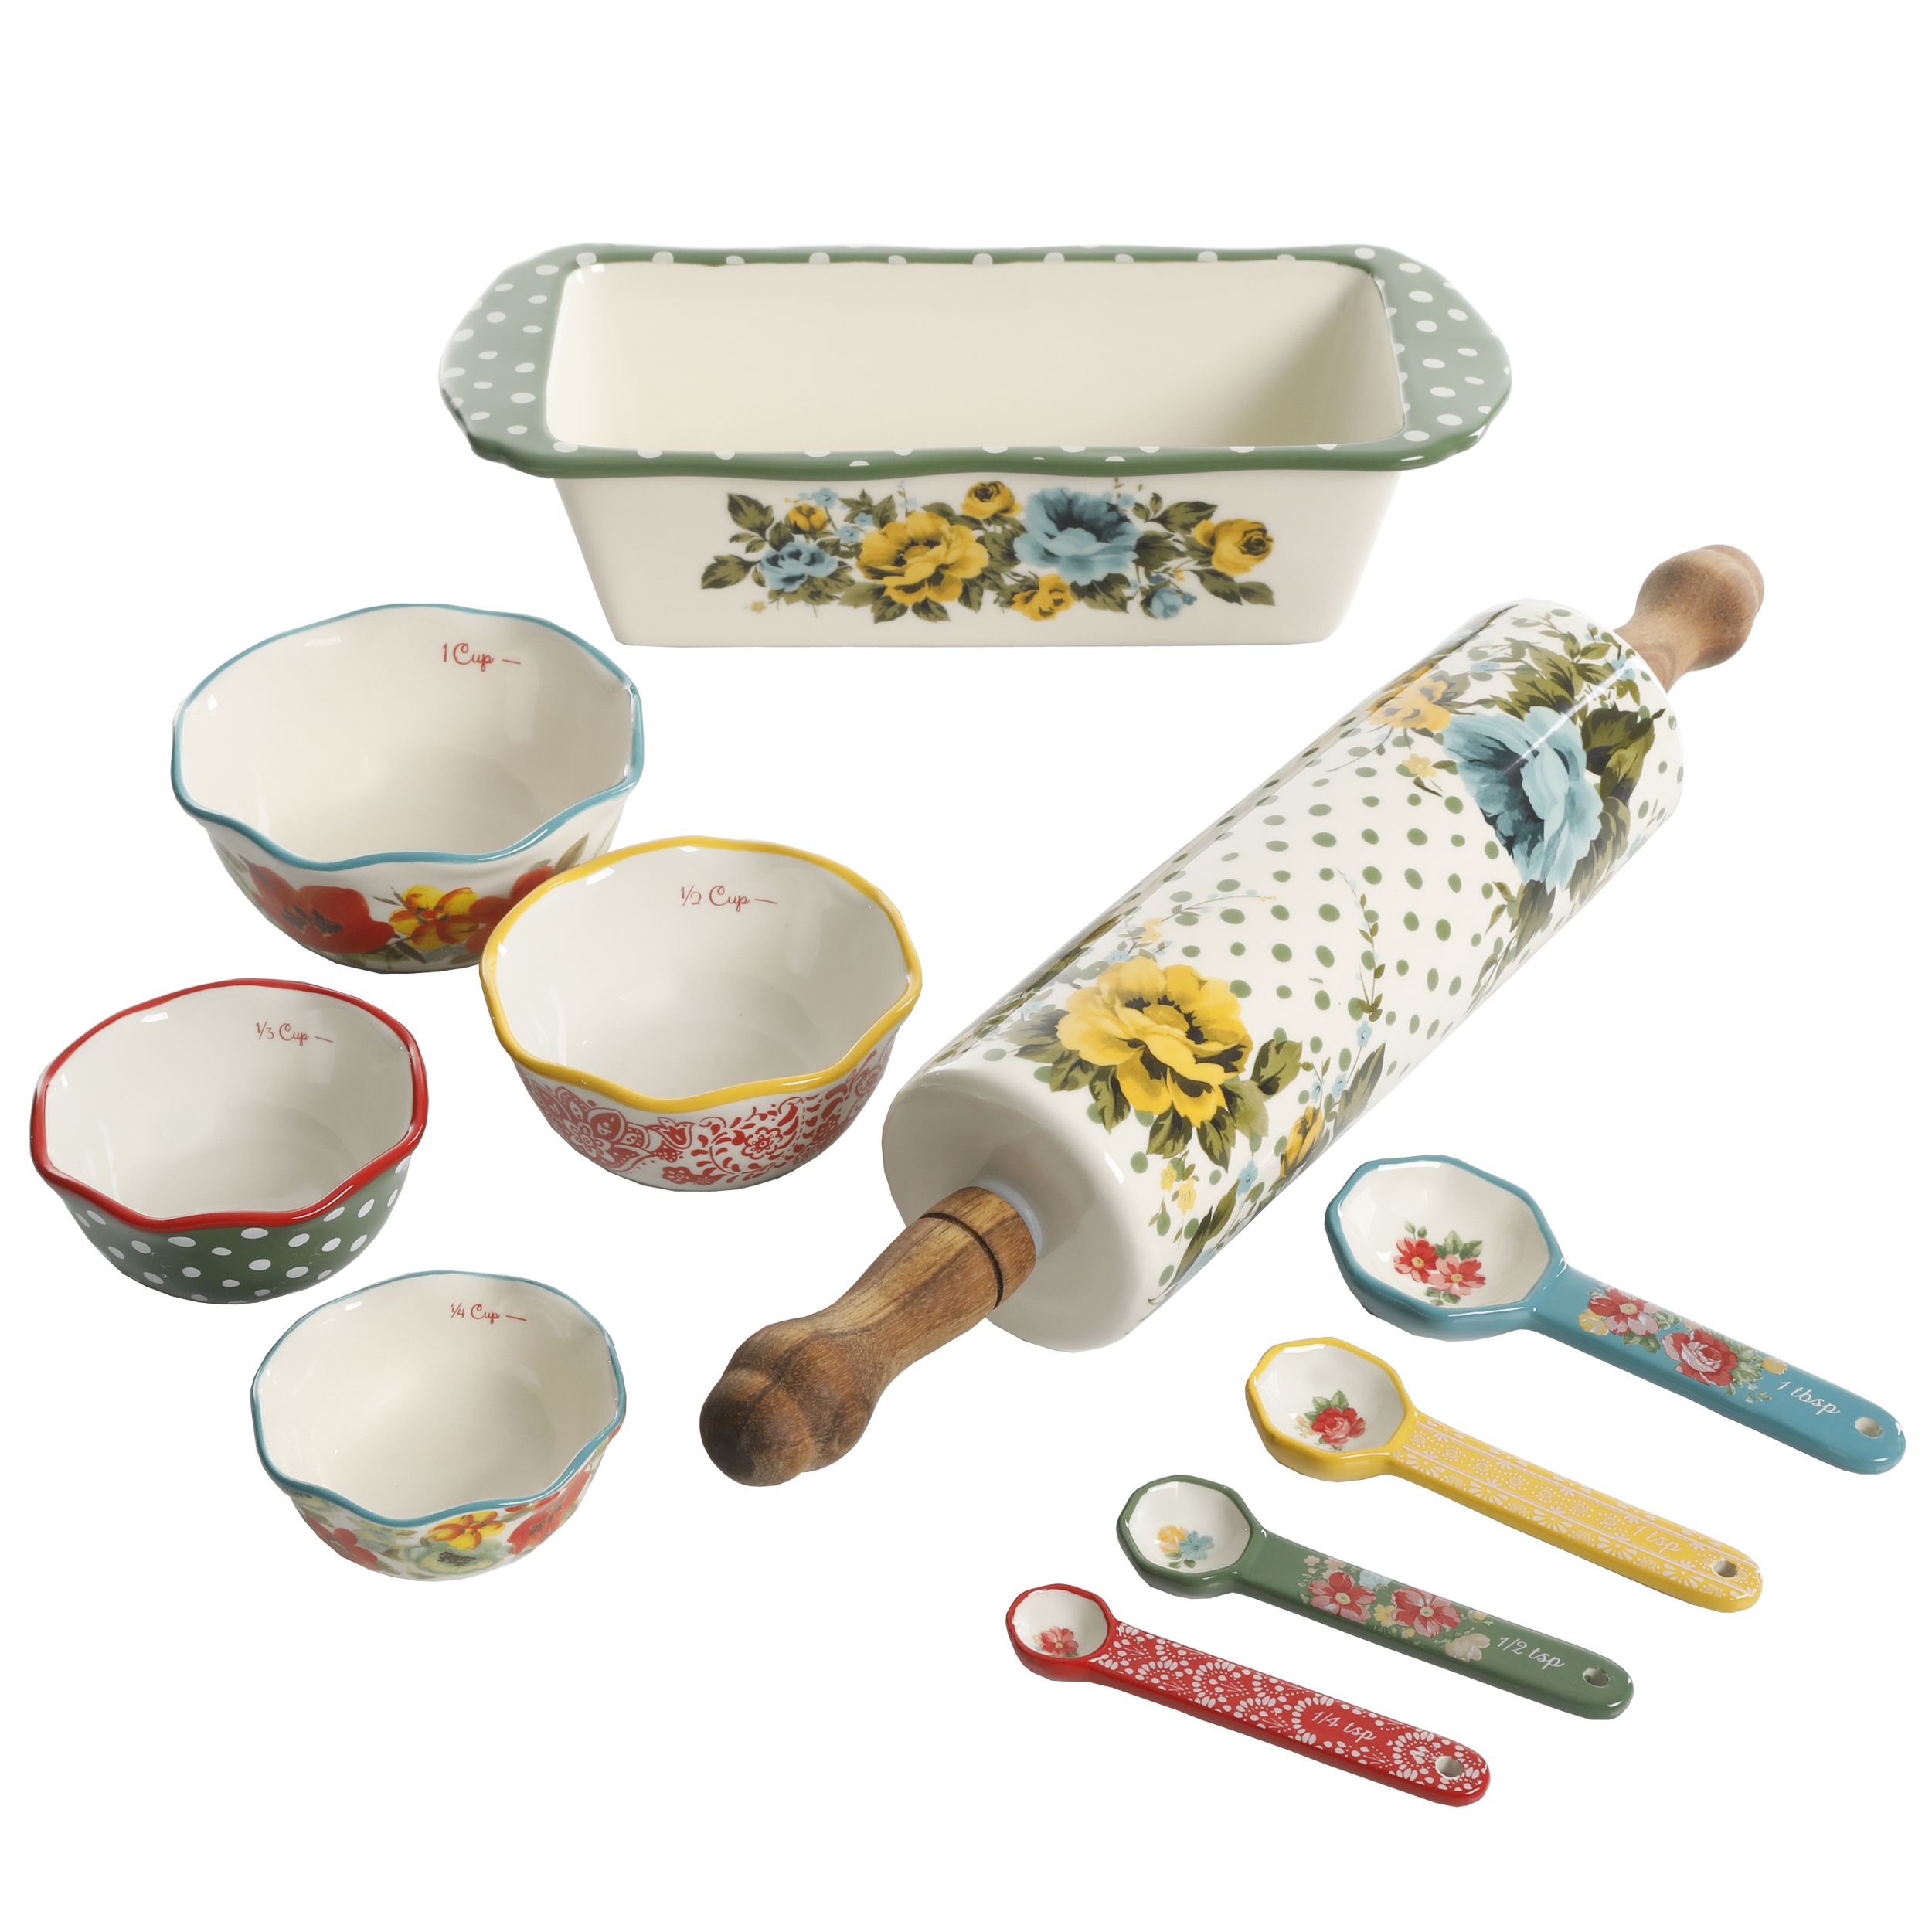 The Pioneer Woman Harvest Ceramic Bakeware Set: $40 at Walmart